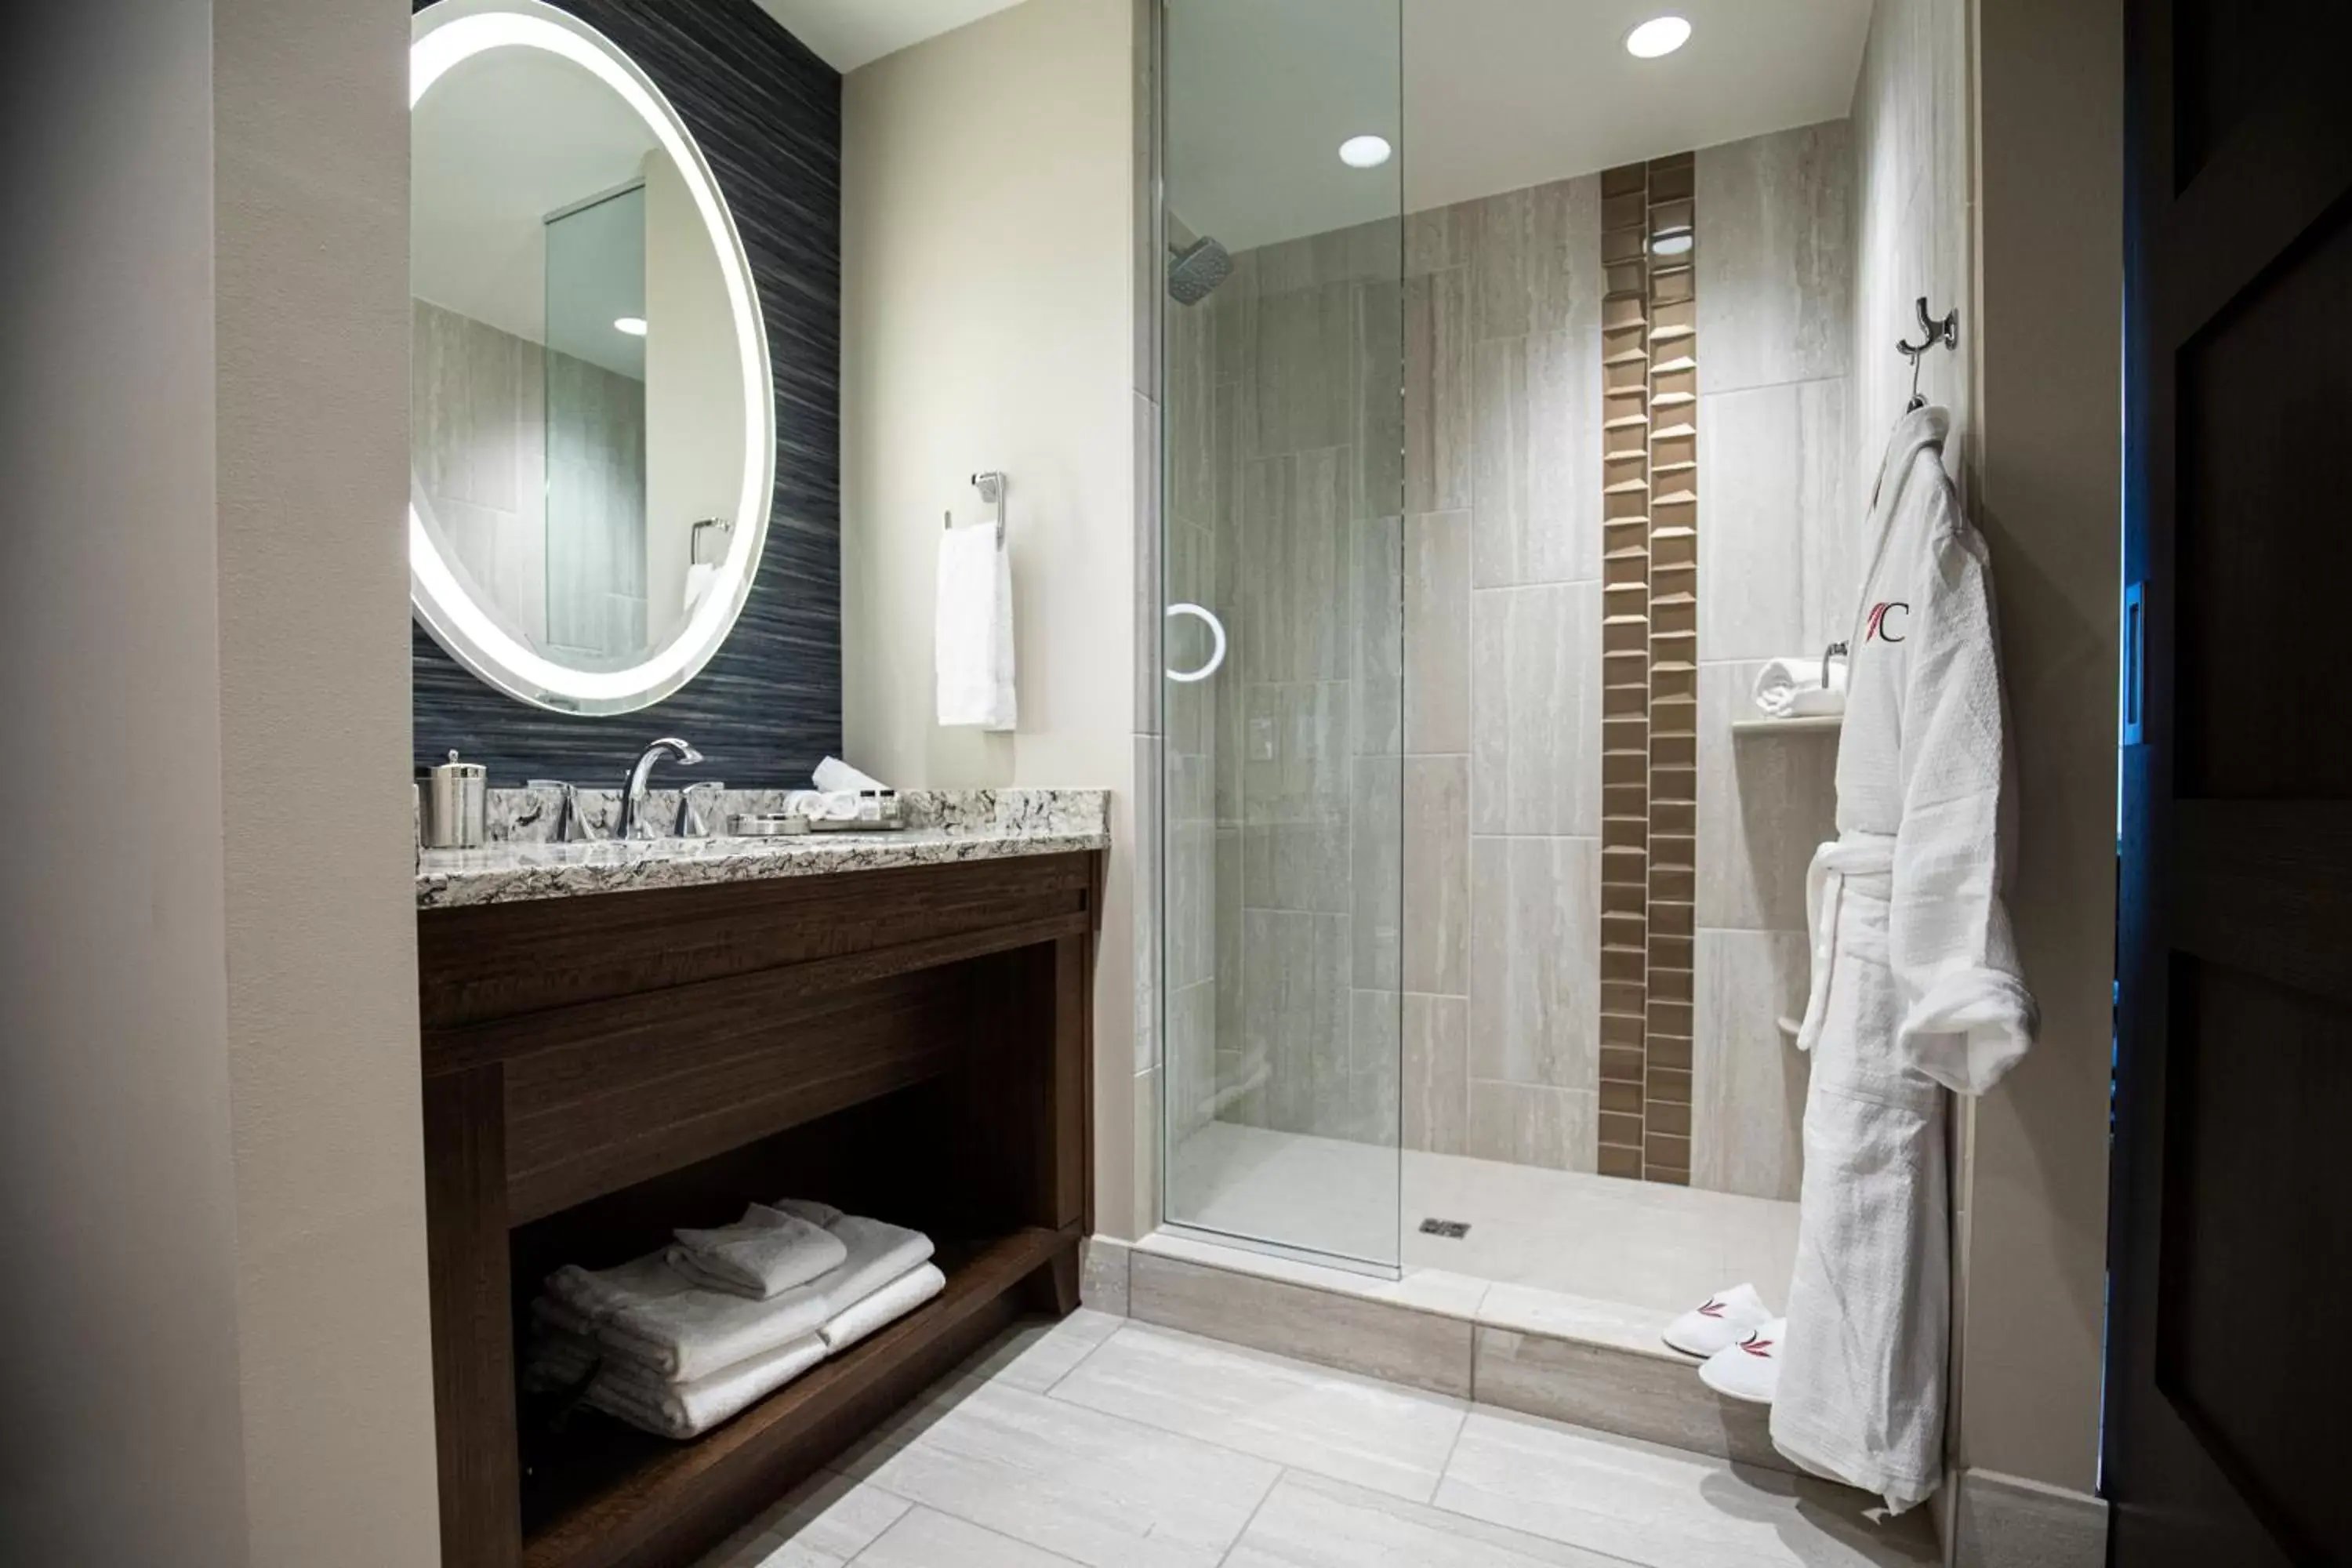 Shower, Bathroom in Choctaw Casino & Resort, Durant